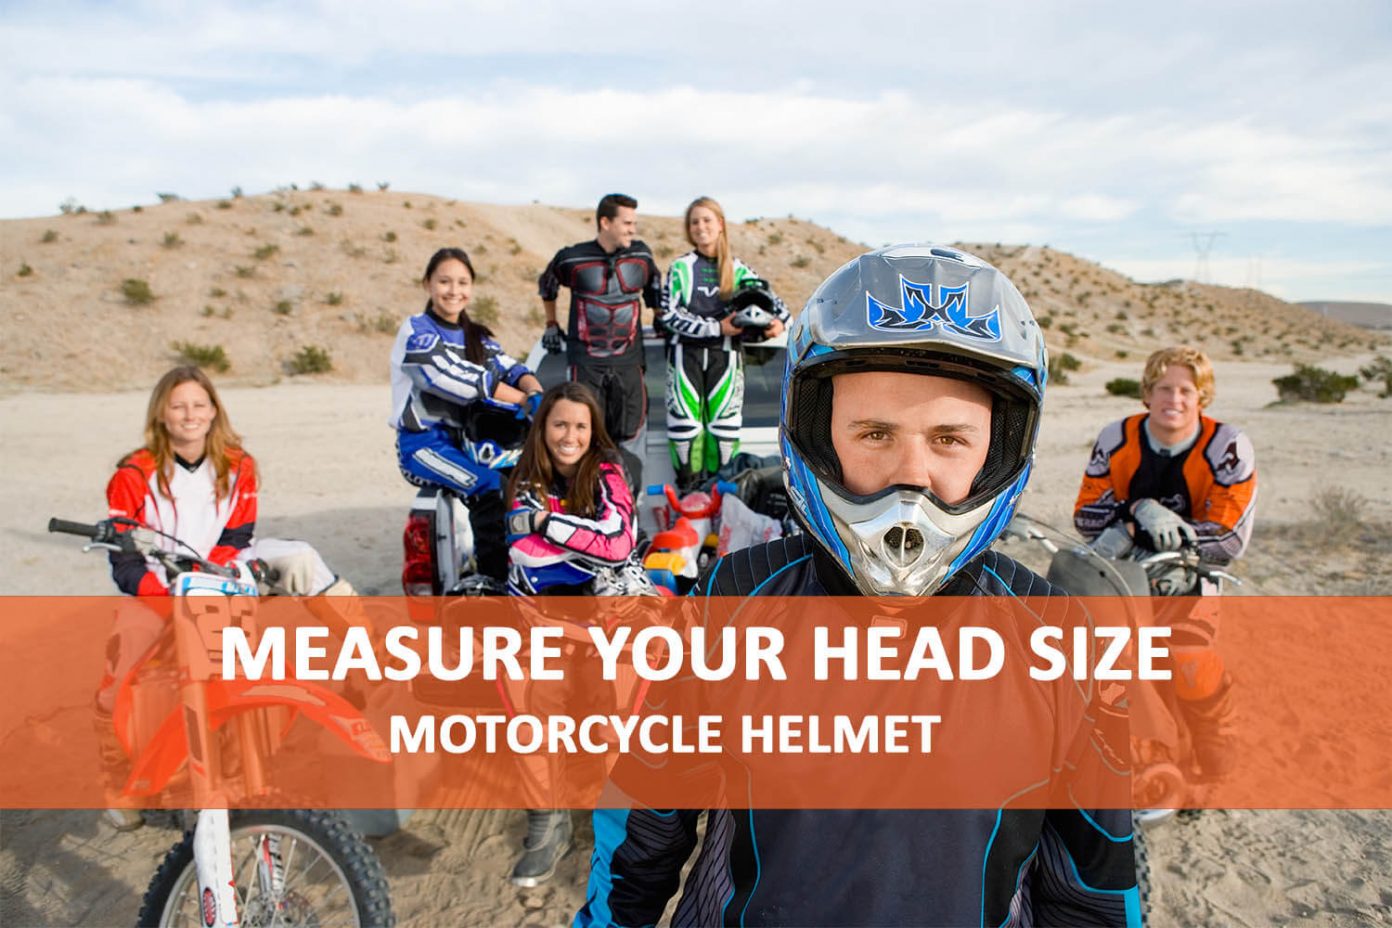 How to measure head for motorcycle helmet